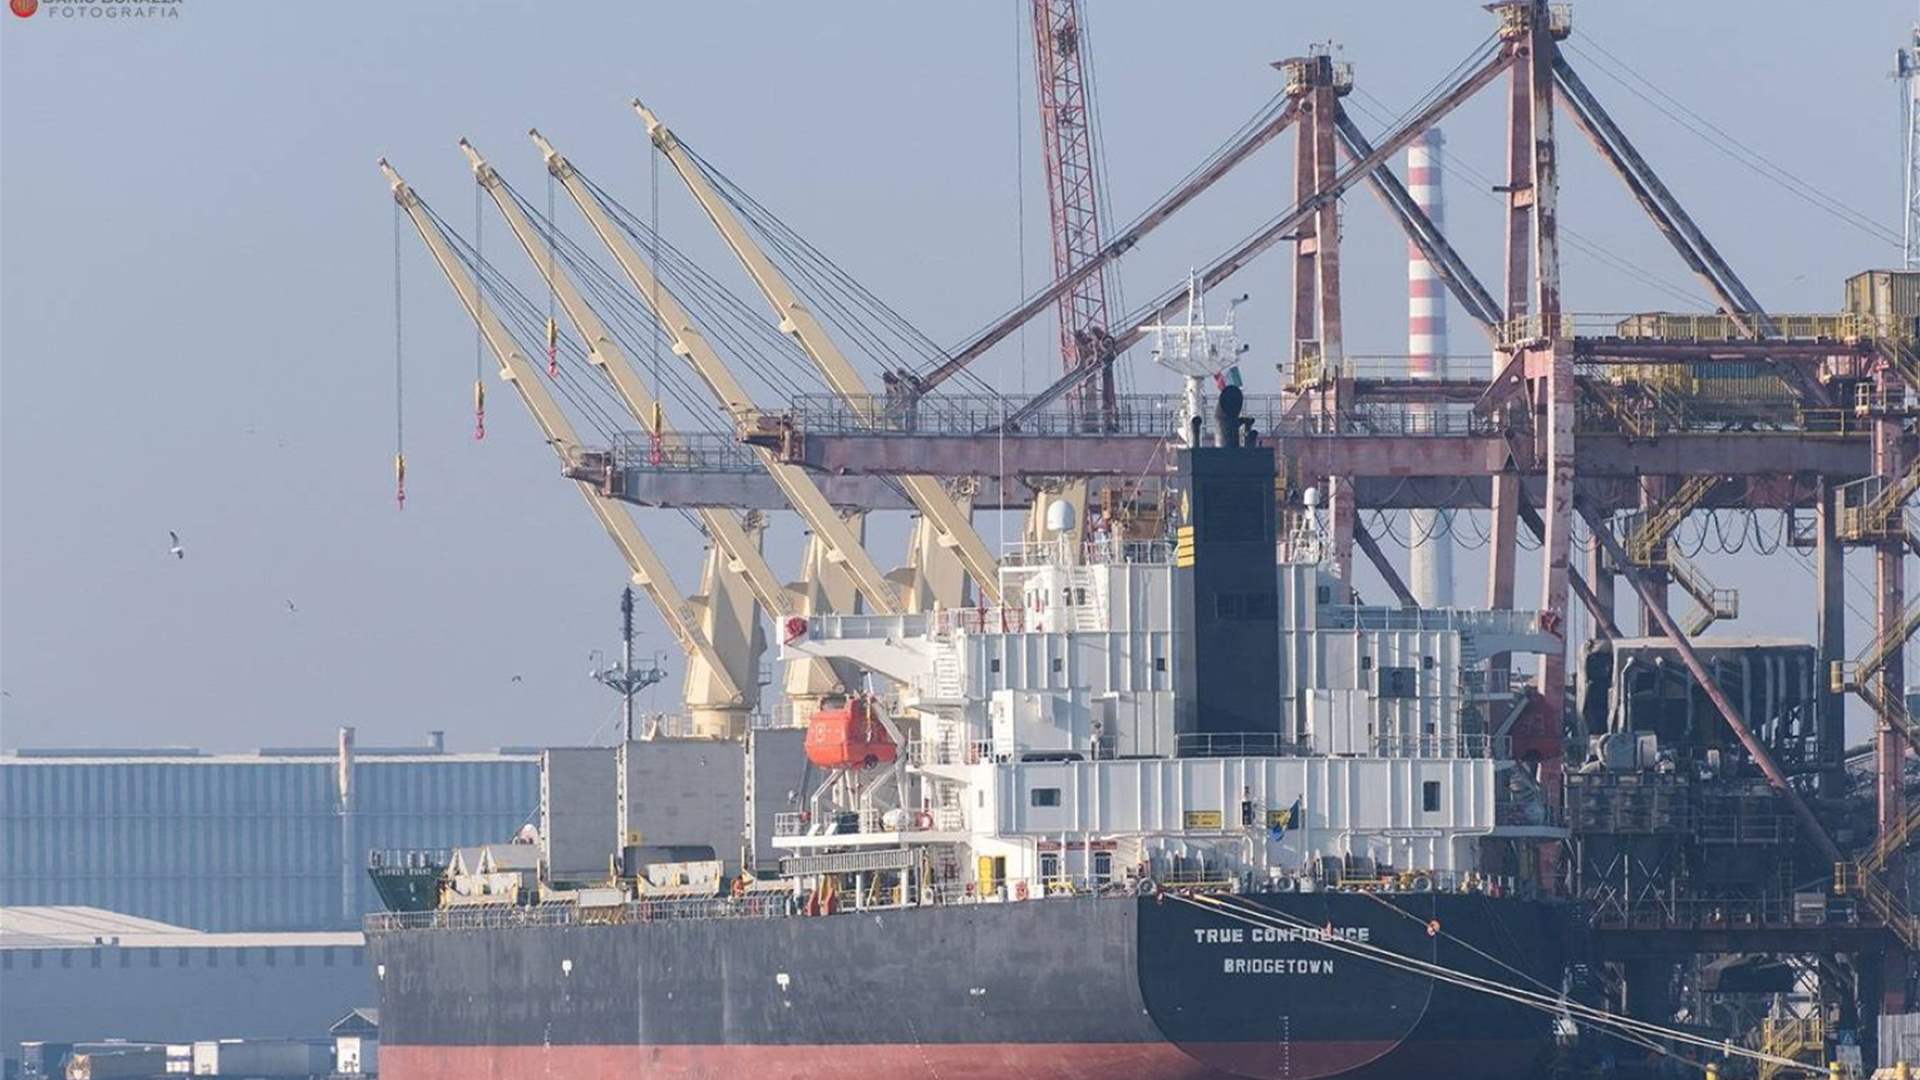 Spanish aid ship spotted off the coast of Gaza